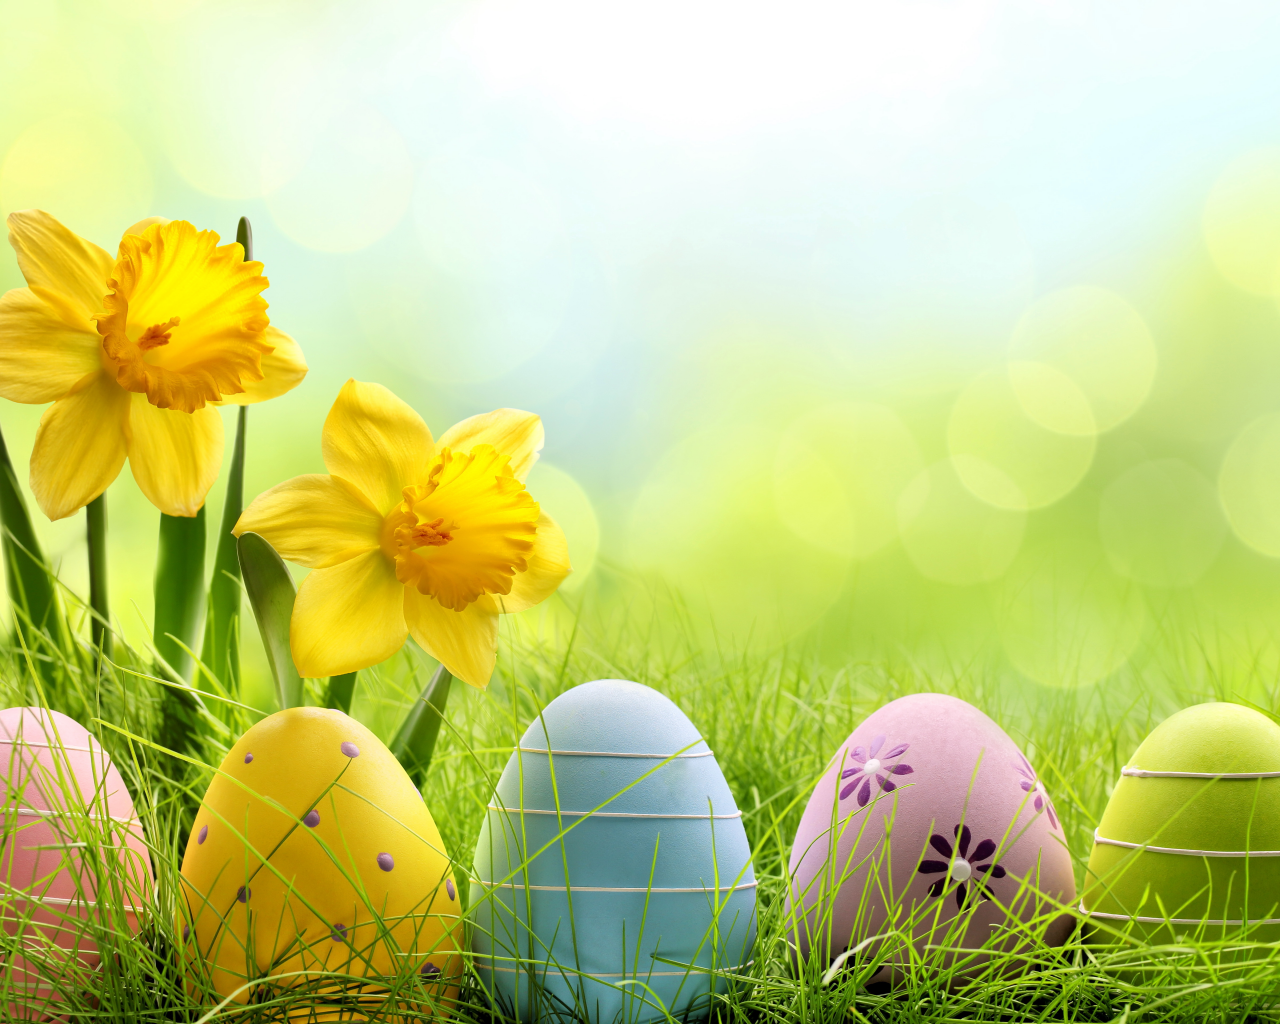 daffodils, flowers, spring, grass, пасха, eggs, meadow, весна, easter, sunshine, луг